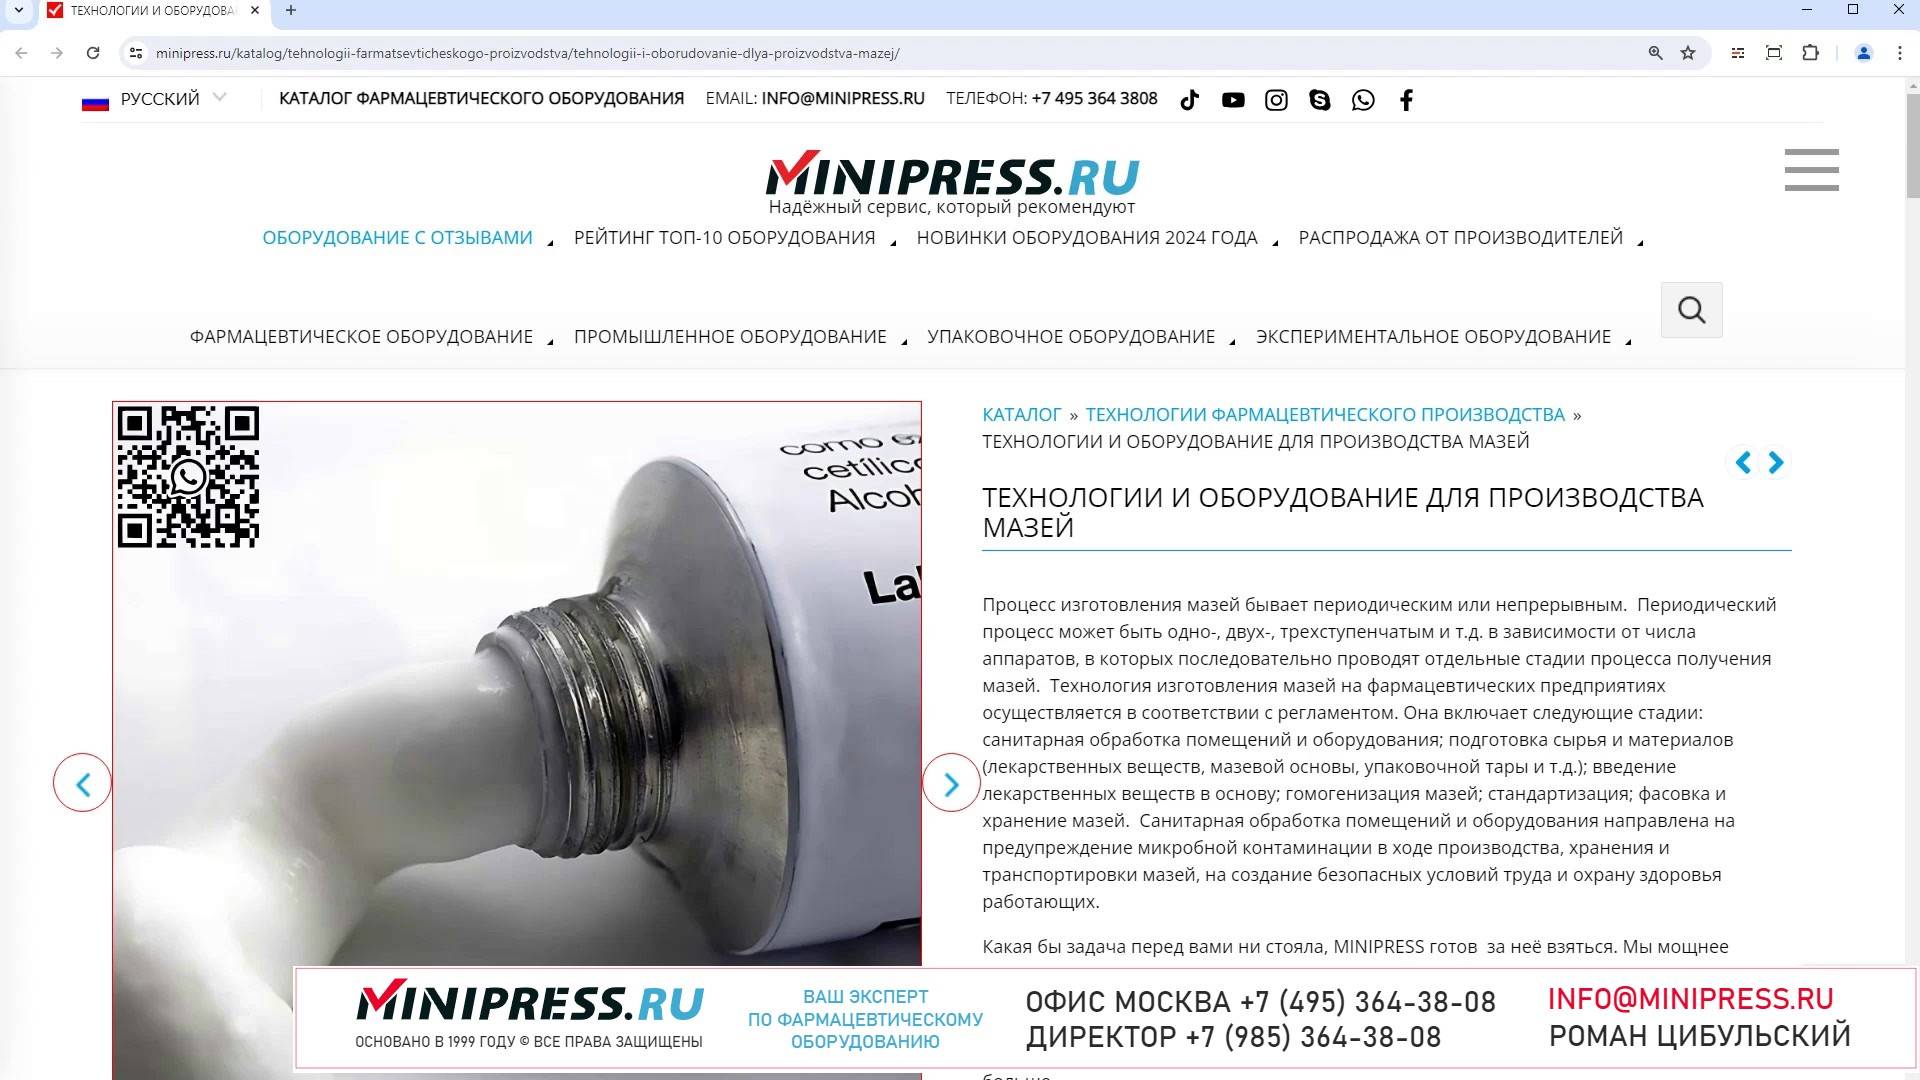 Minipress.ru Технологии и оборудование для производства мазей